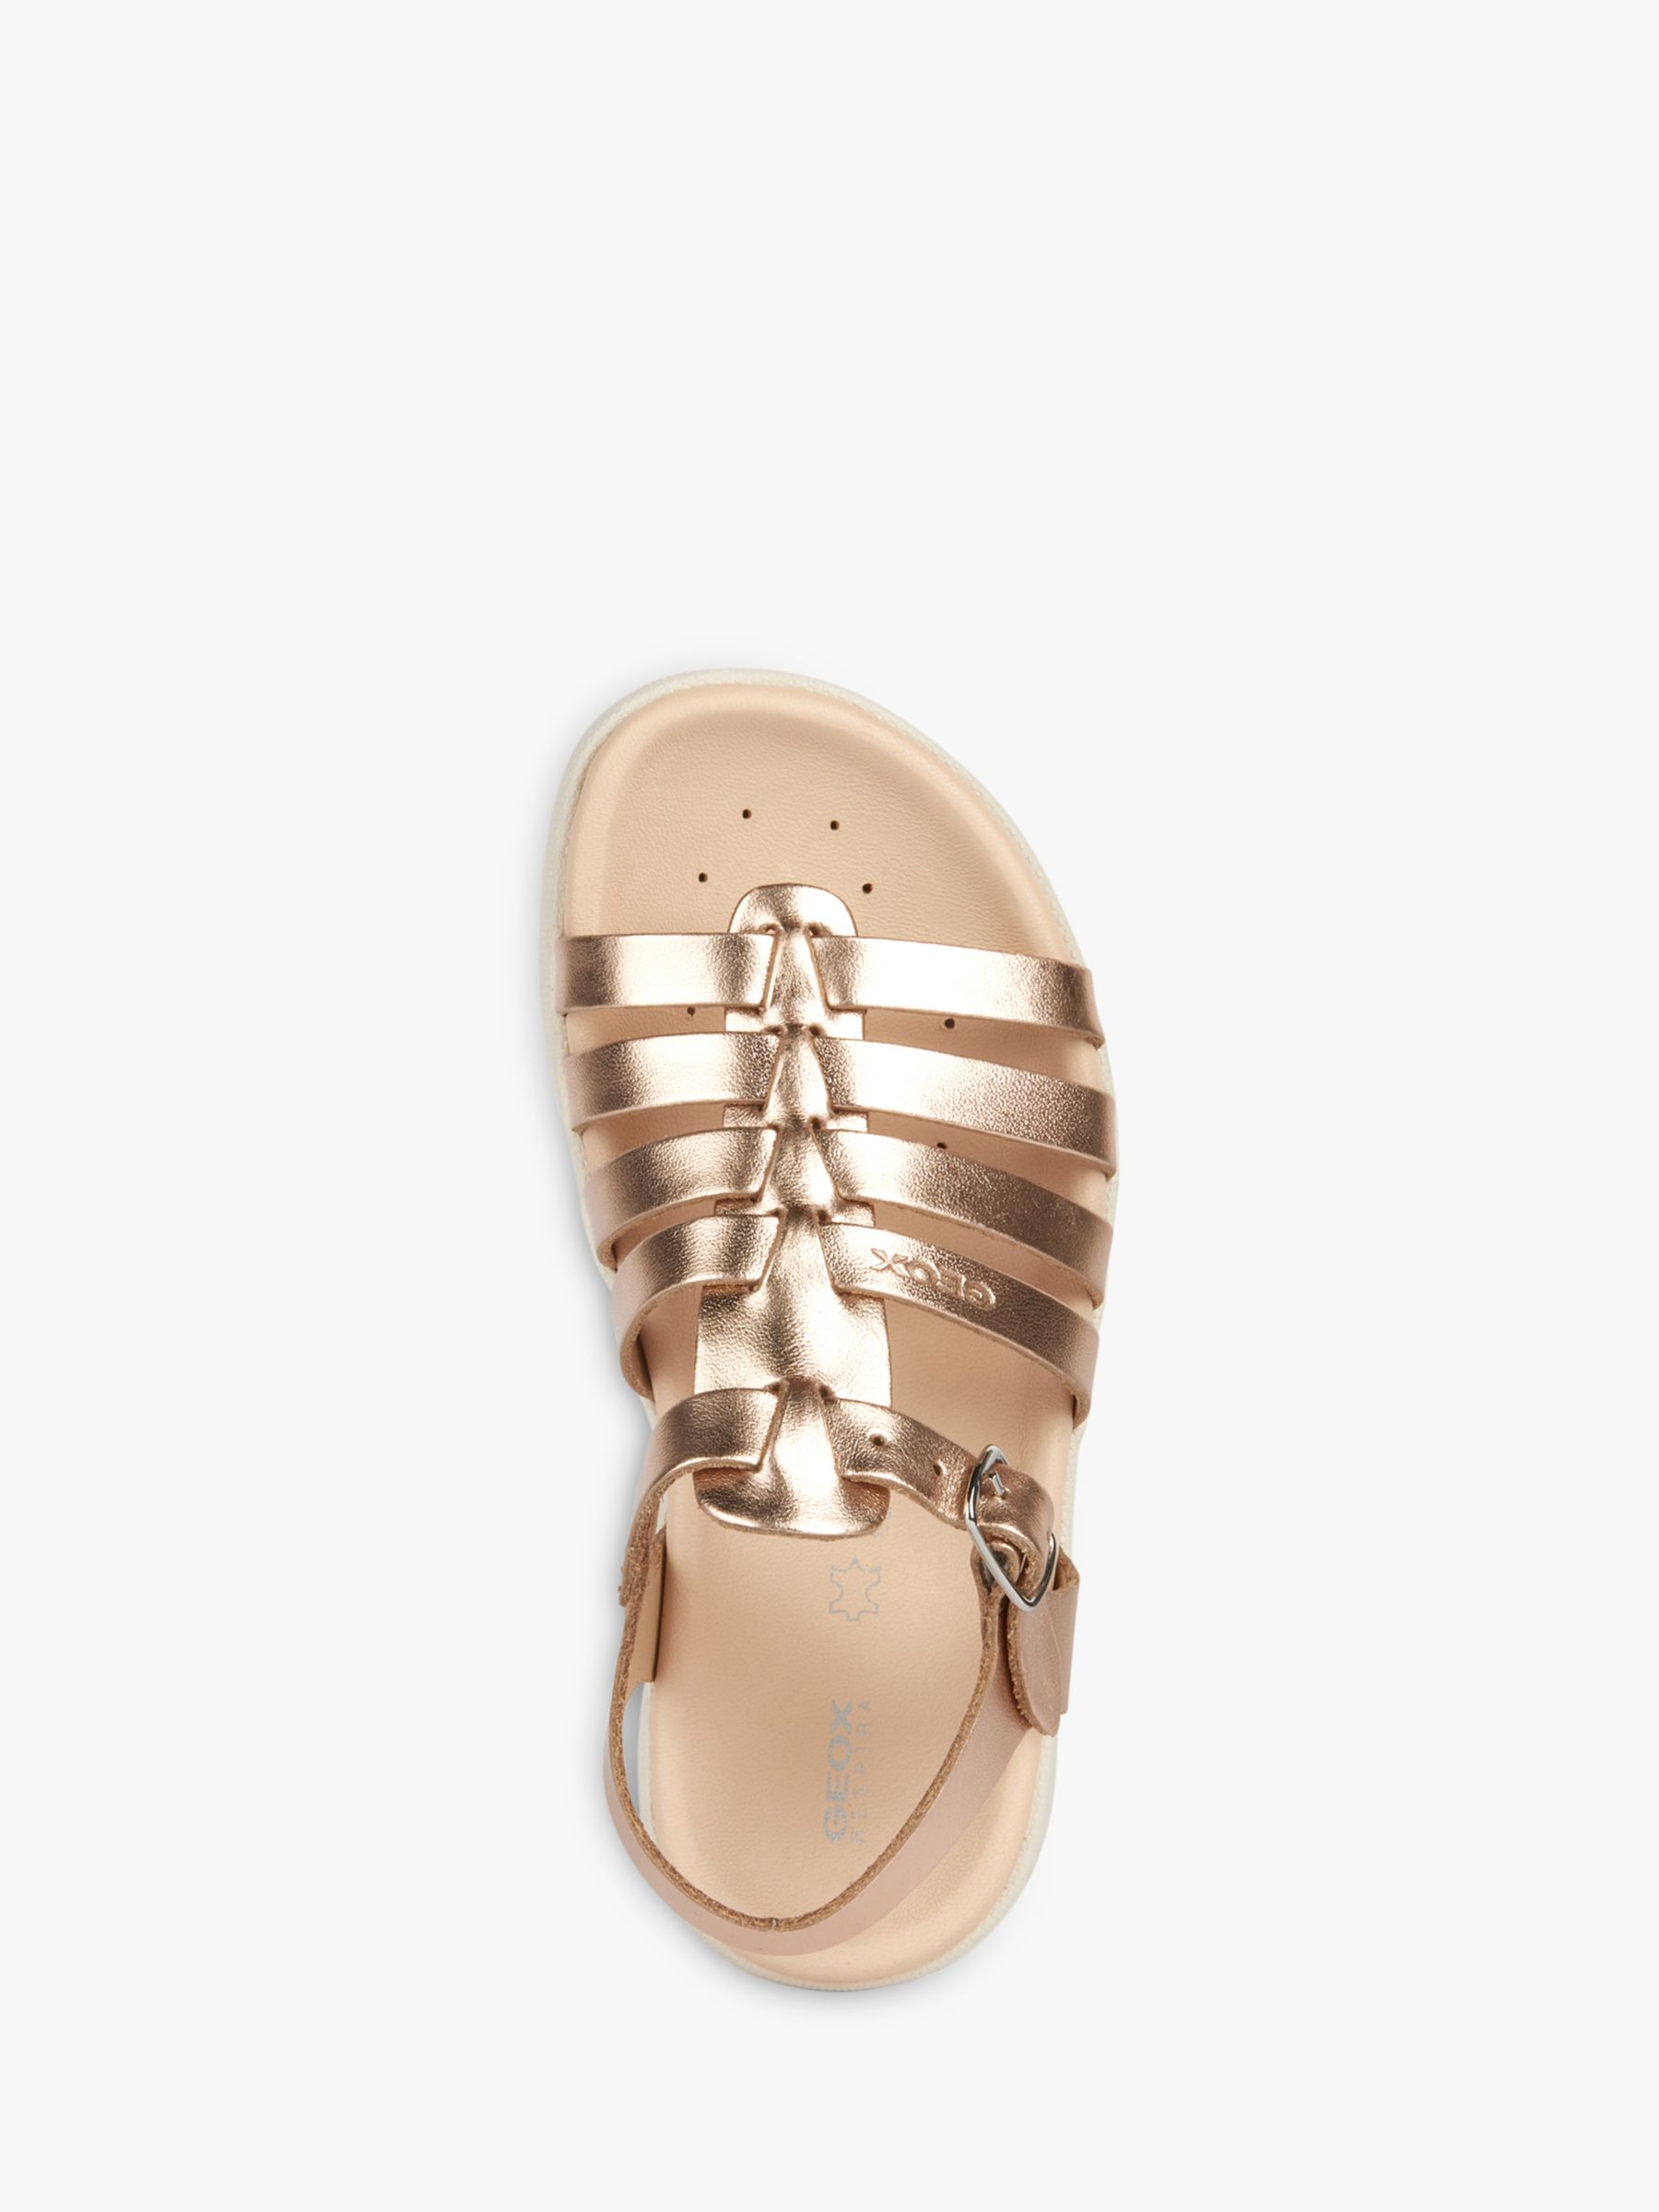 Geox Kids' Soleima Metallic Sandals, Copper, 24